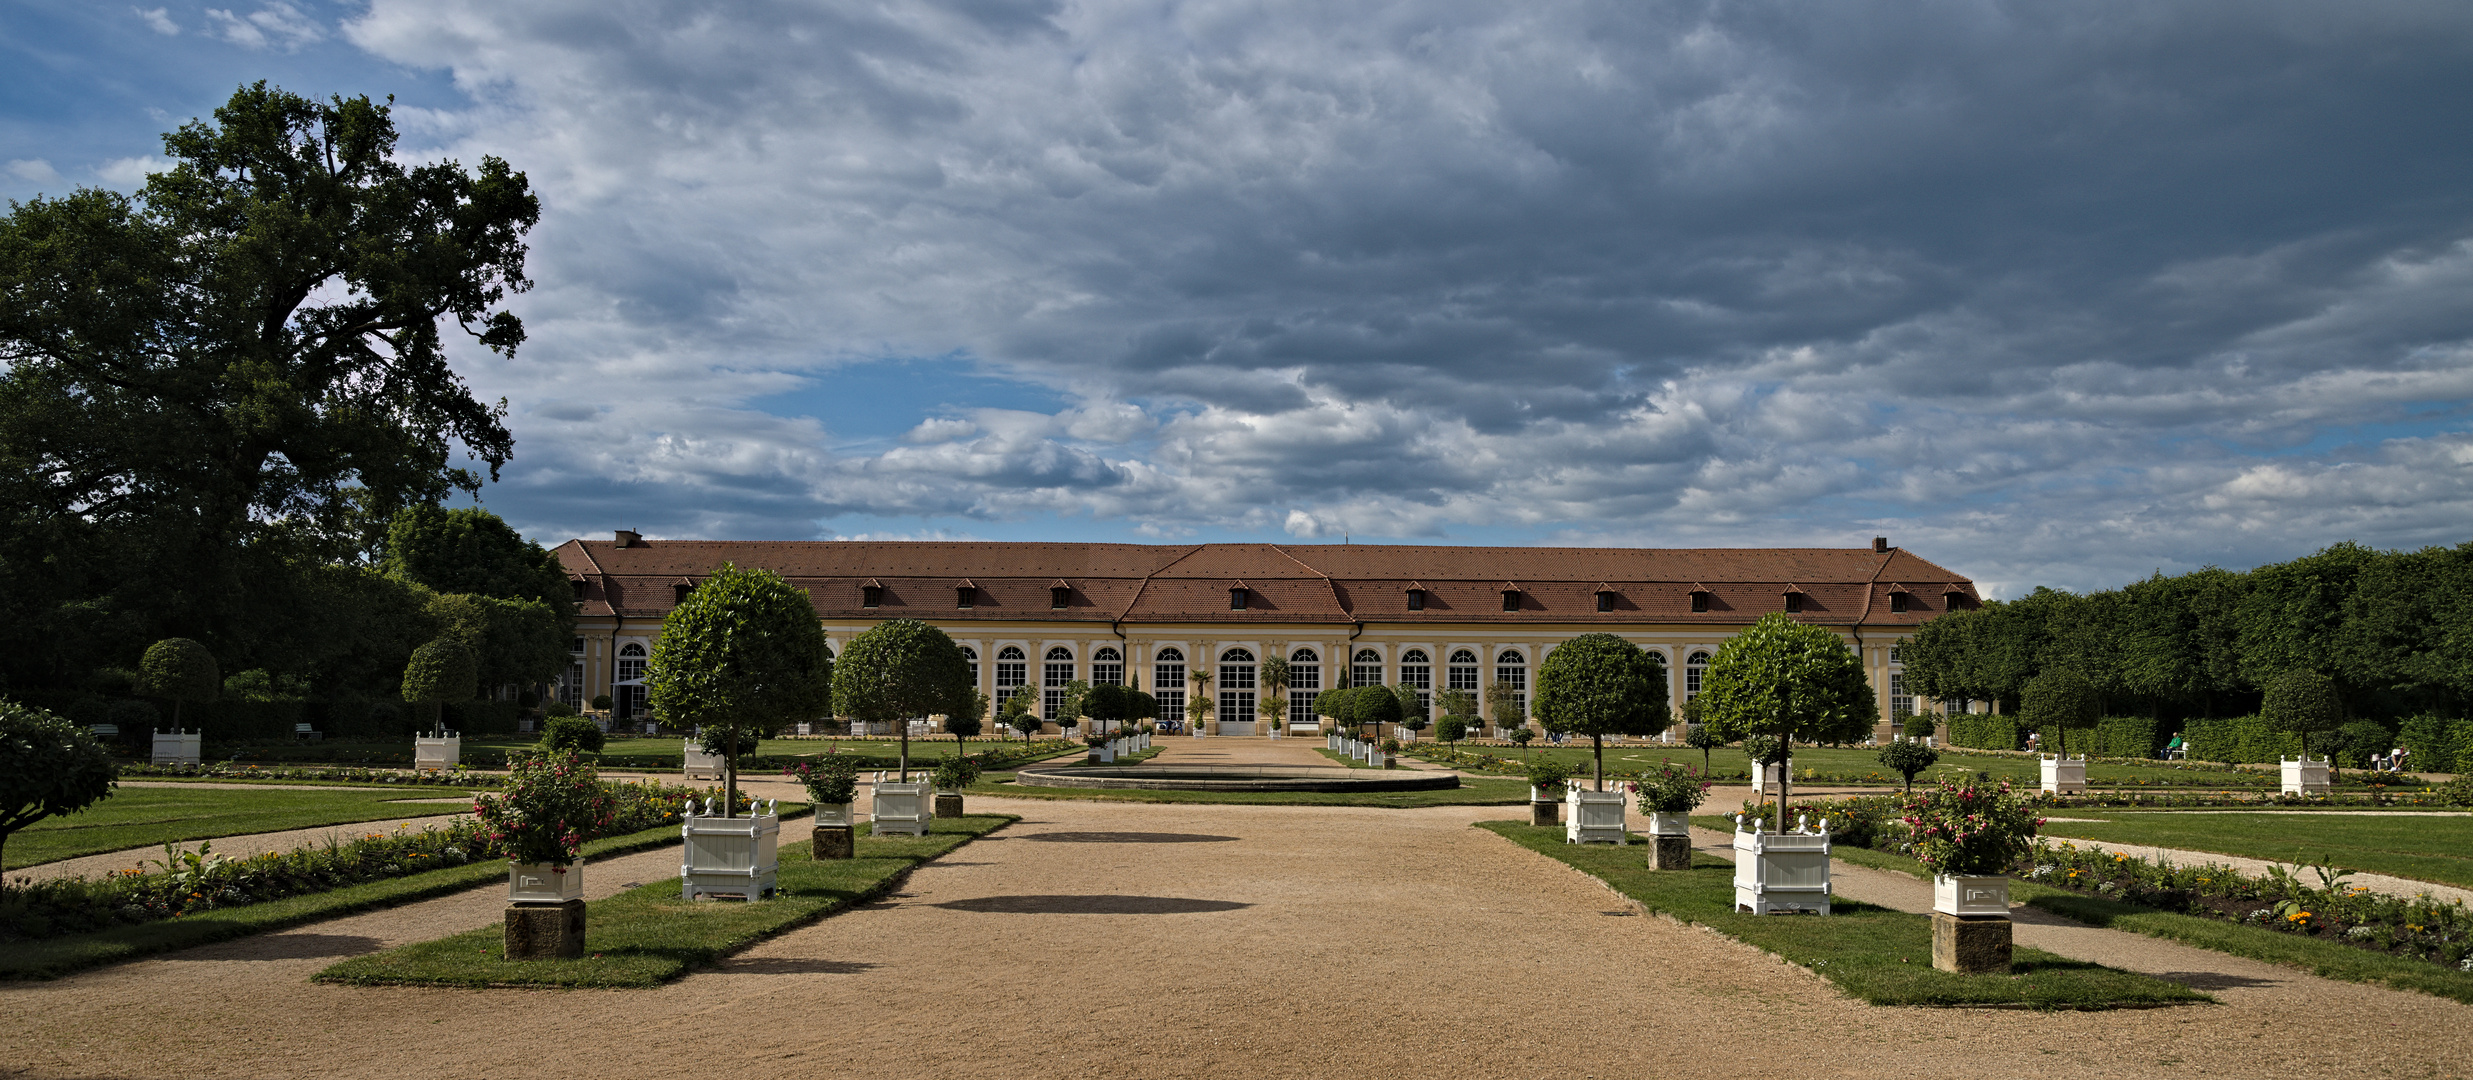 Barocke Orangerie Ansbach